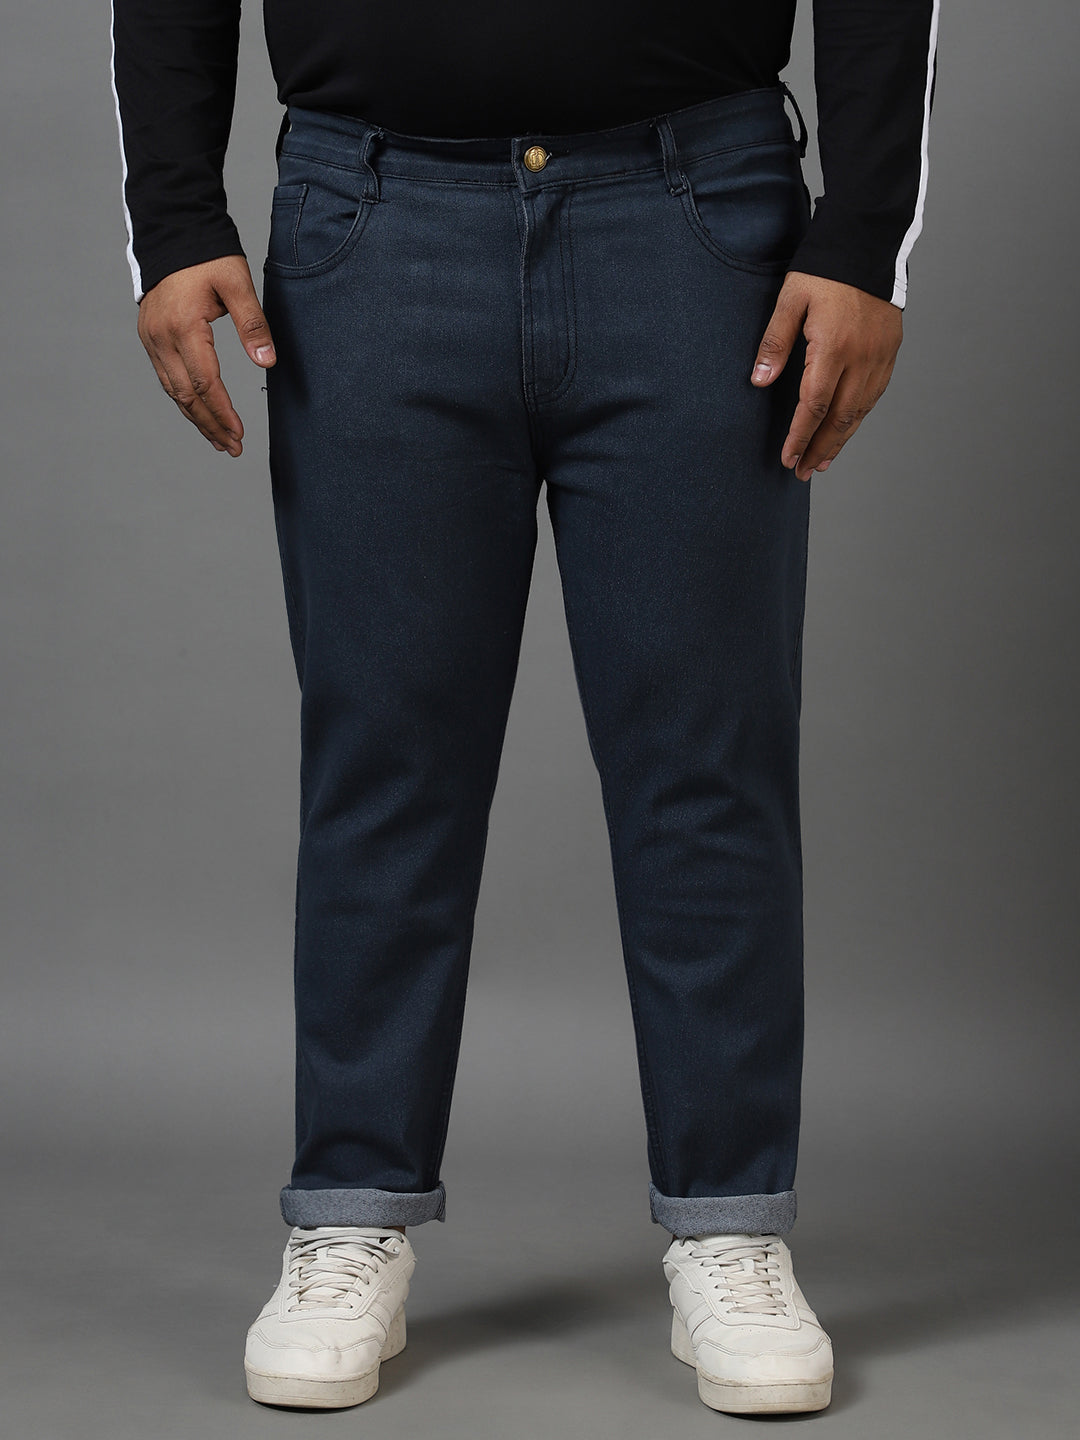 Urbano Plus Men's Dark Grey Regular Fit Denim Jeans Stretchable